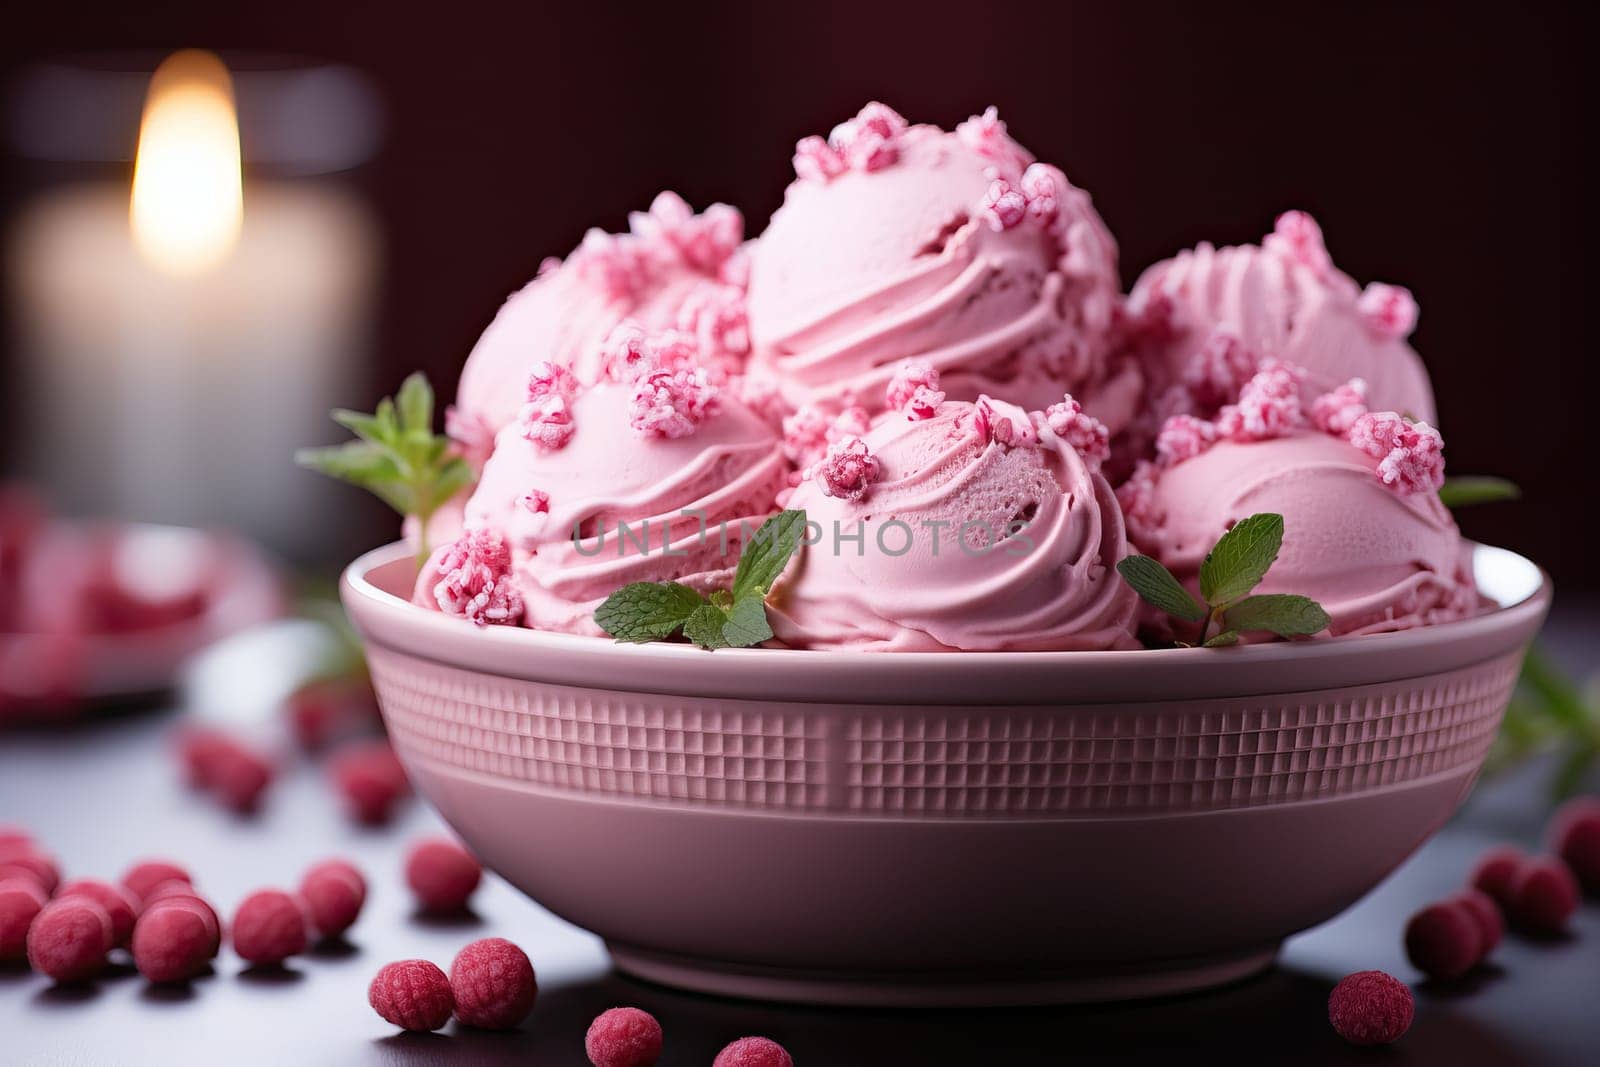 Strawberry ice cream balls in a bowl close-up.